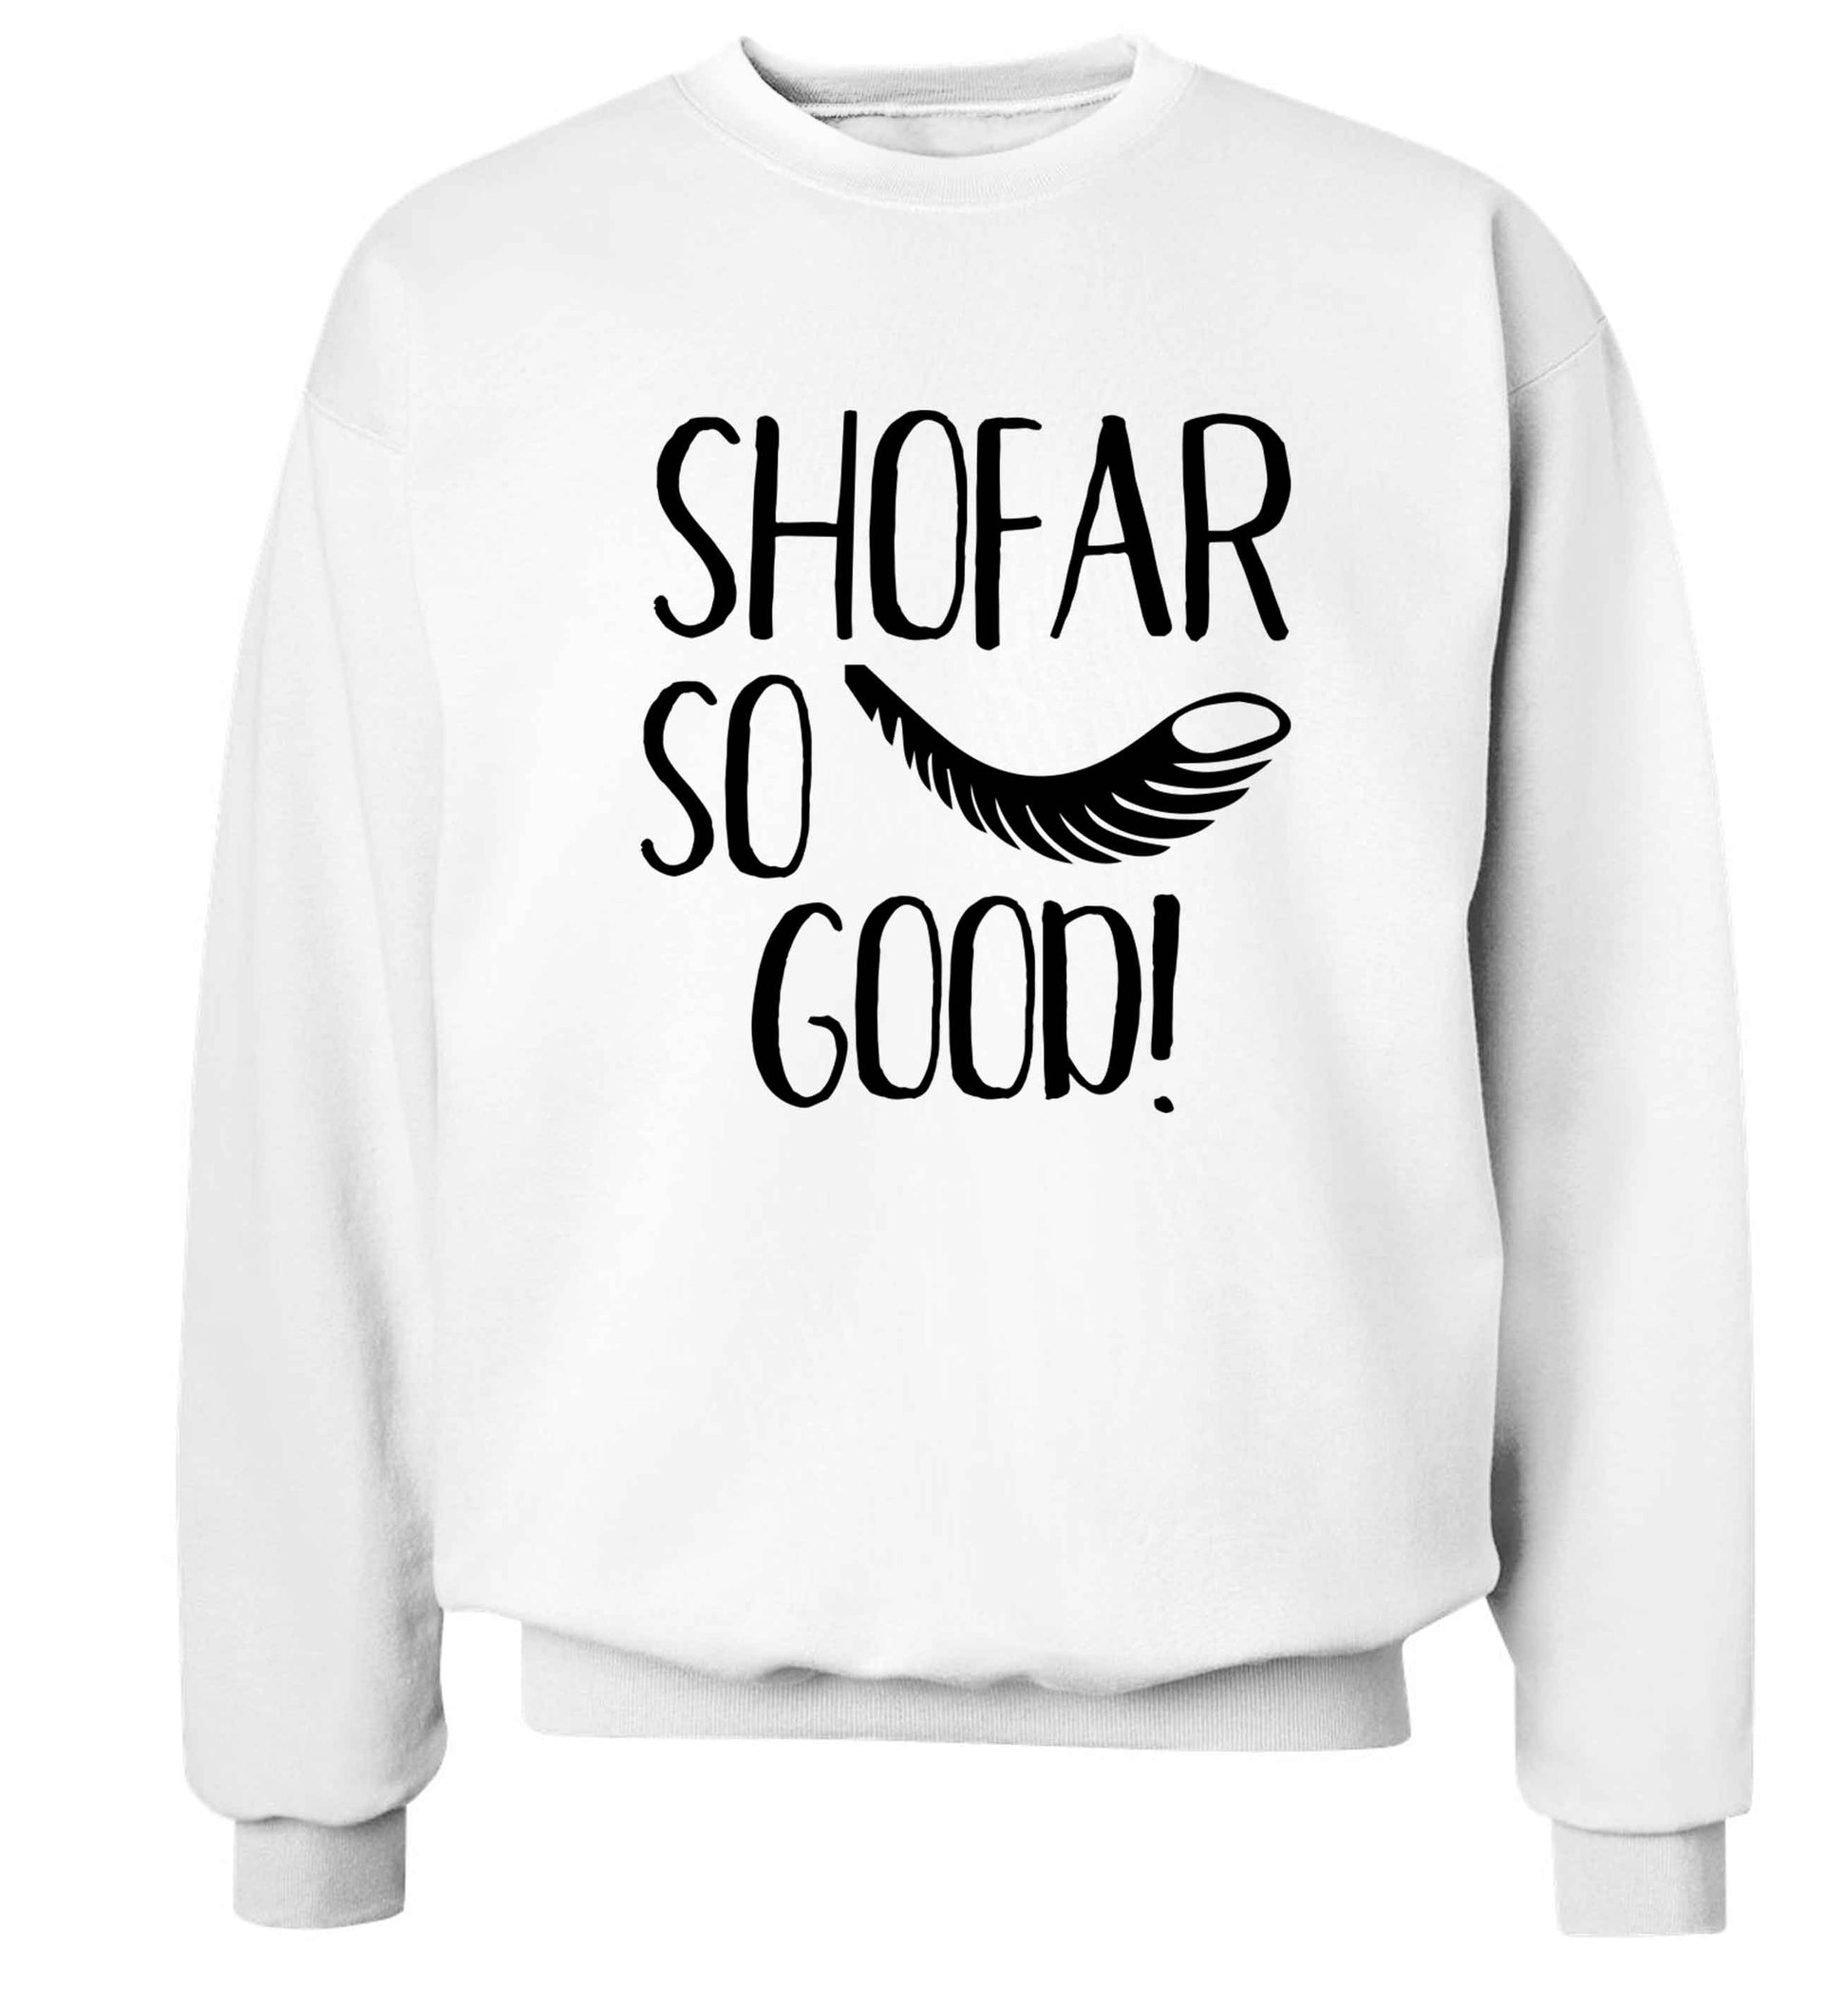 Shofar so good! Adult's unisex white Sweater 2XL